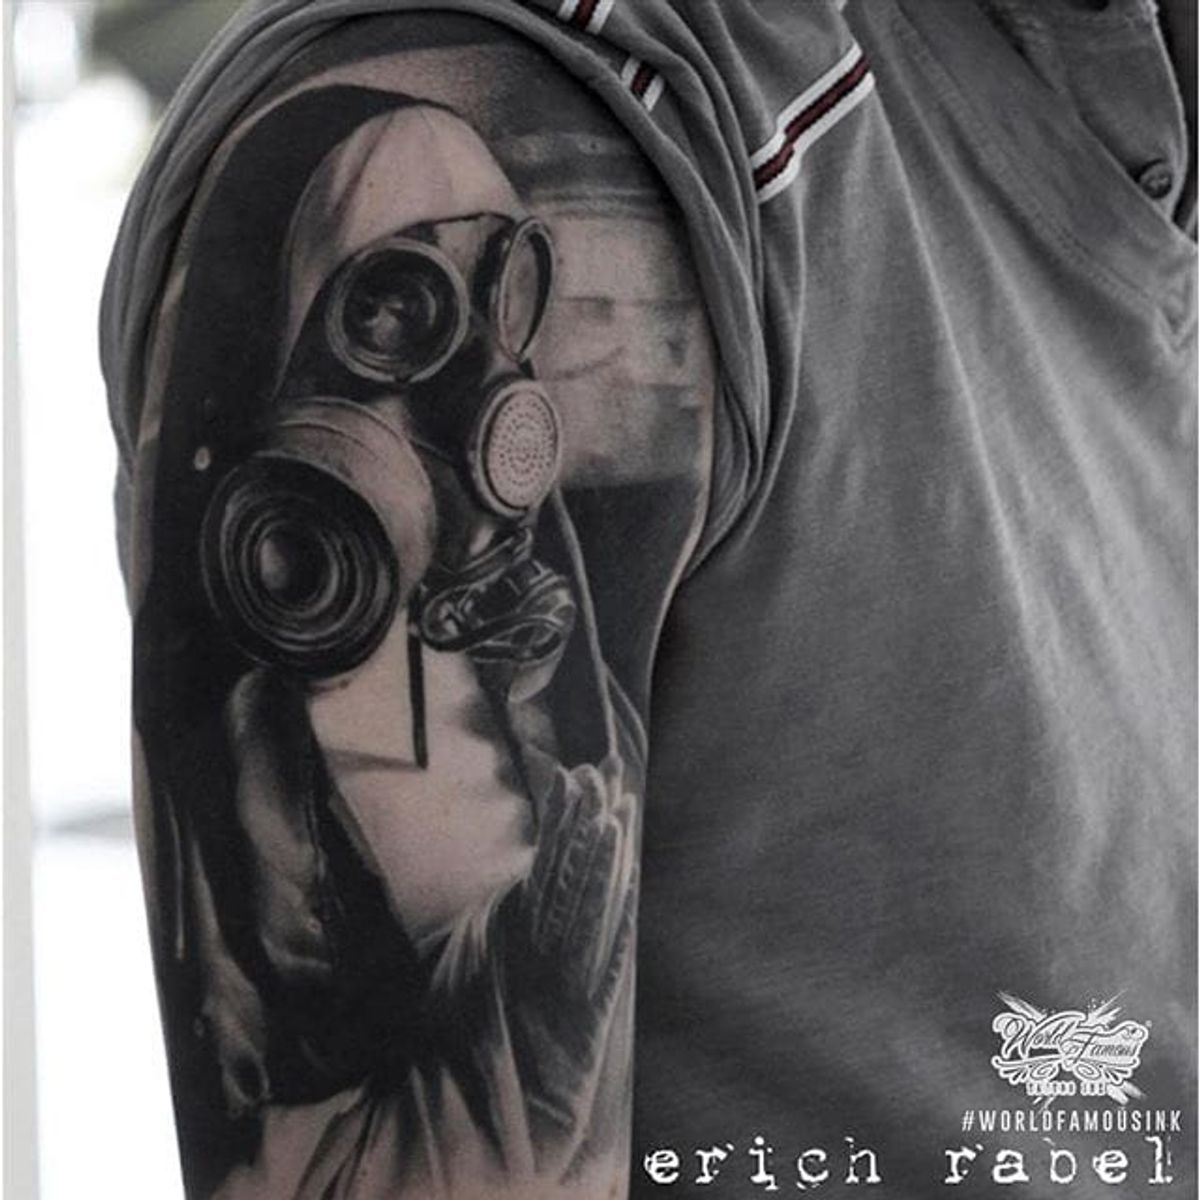 Tattoo uploaded by Xavier • Gas mask tattoo by Erich Rabel. #horrifying #creepy #macabre #portrait #horror #blackandgrey #gasmask Tattoodo